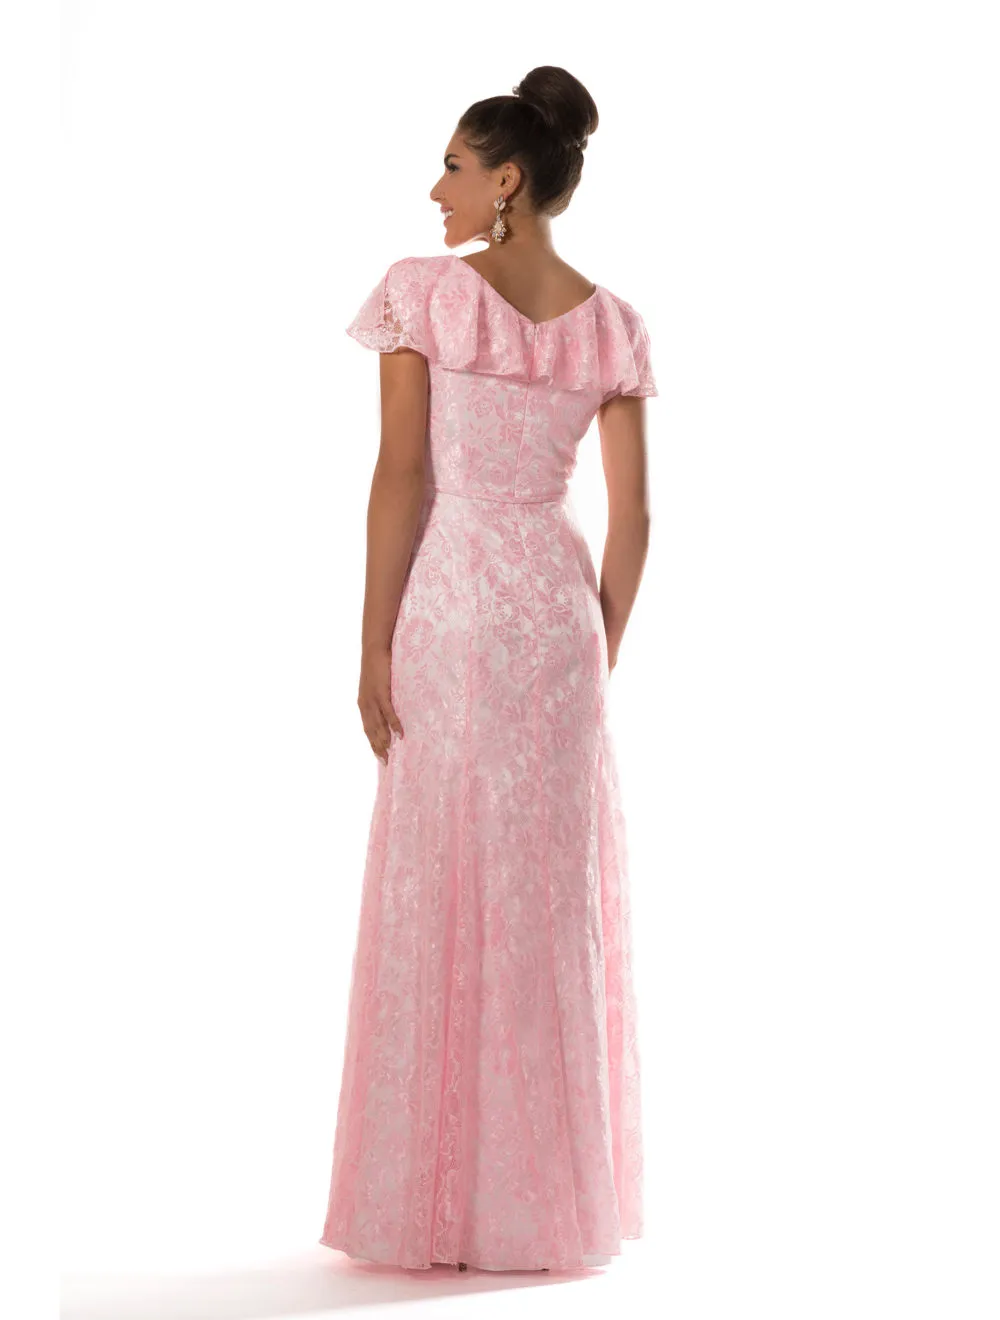 Vestidos de dama de honra modestos de laço cor-de-rosa com mangas vintage vintage vintage vestidos festa de casamento feitos sob encomenda